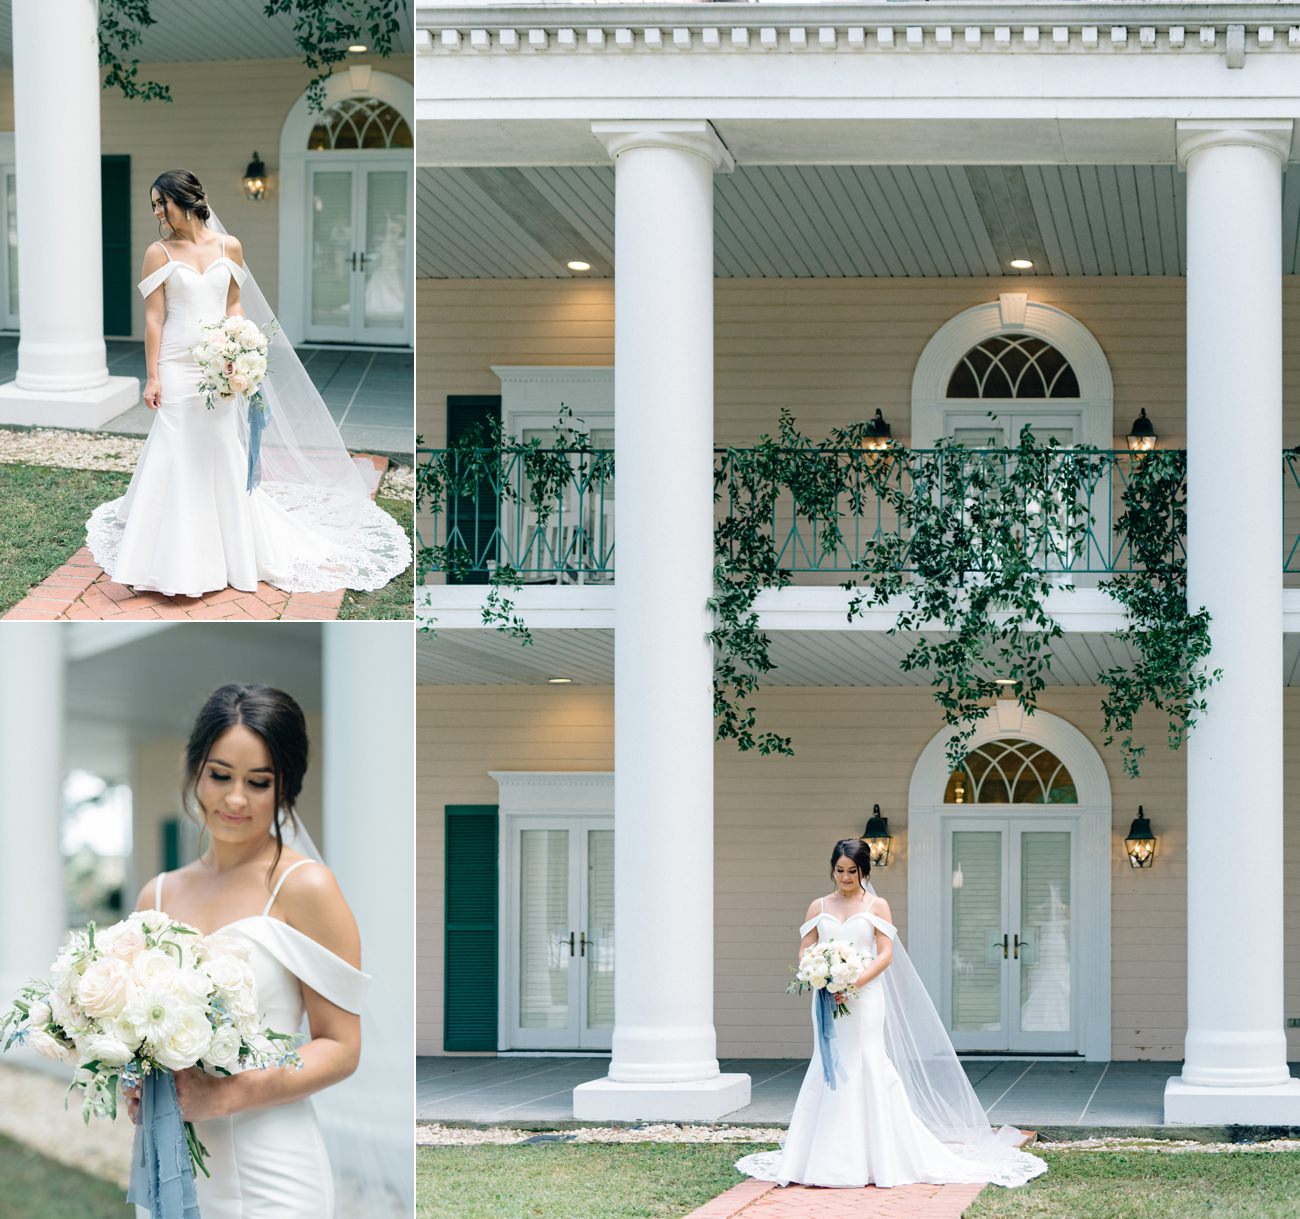 Oak Island Mansion bridal portraits in front of venue taken by Alabama wedding photographers: Olivia Joy Photography